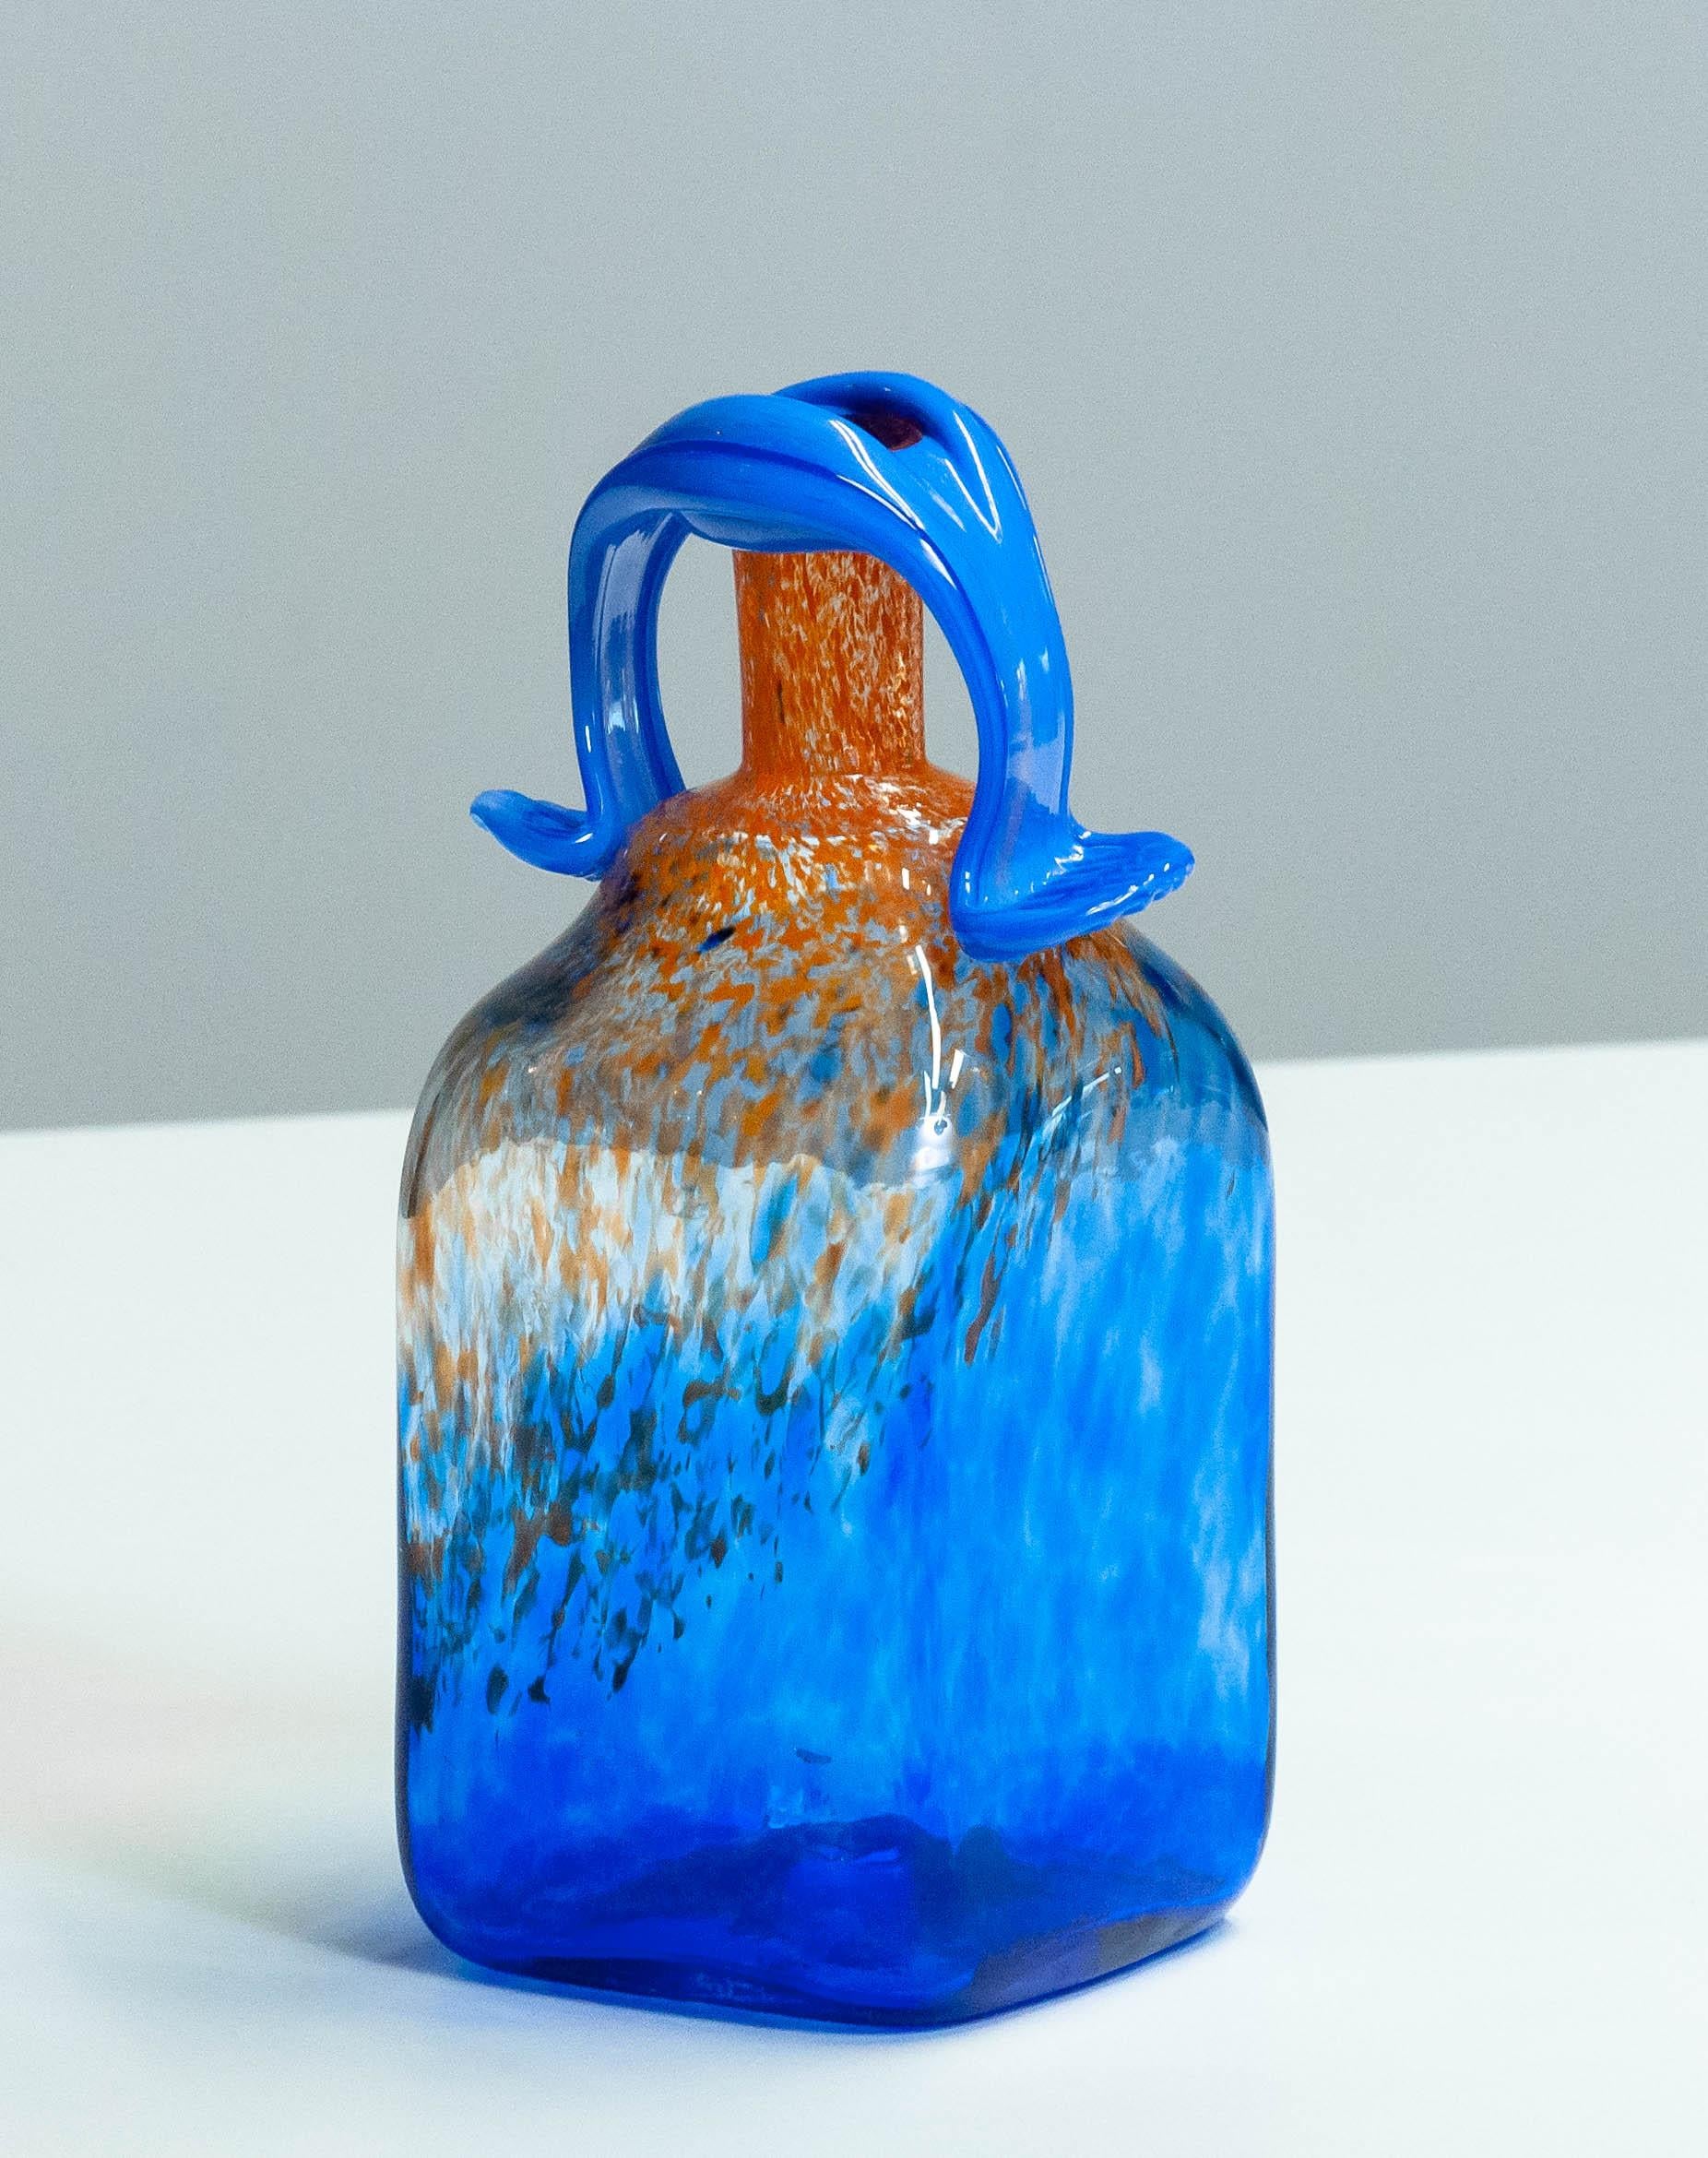 Swedish 1980s Blue Art Glass Bottle Handmade by Staffan Gellerstedt at Studio Glashyttan For Sale